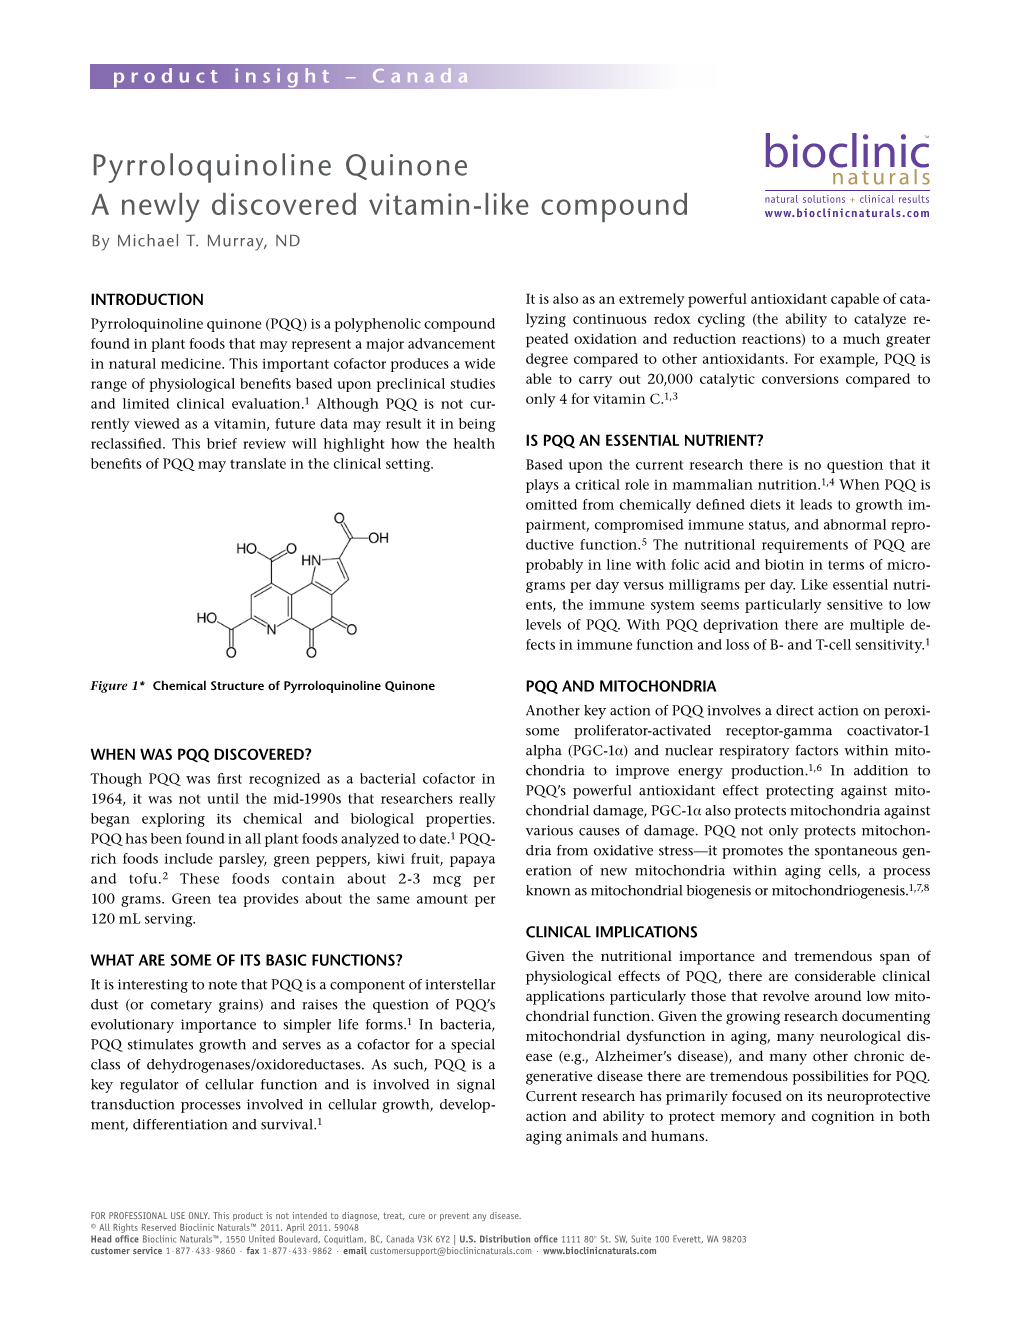 Pyrroloquinoline Quinone a Newly Discovered Vitamin-Like Compound